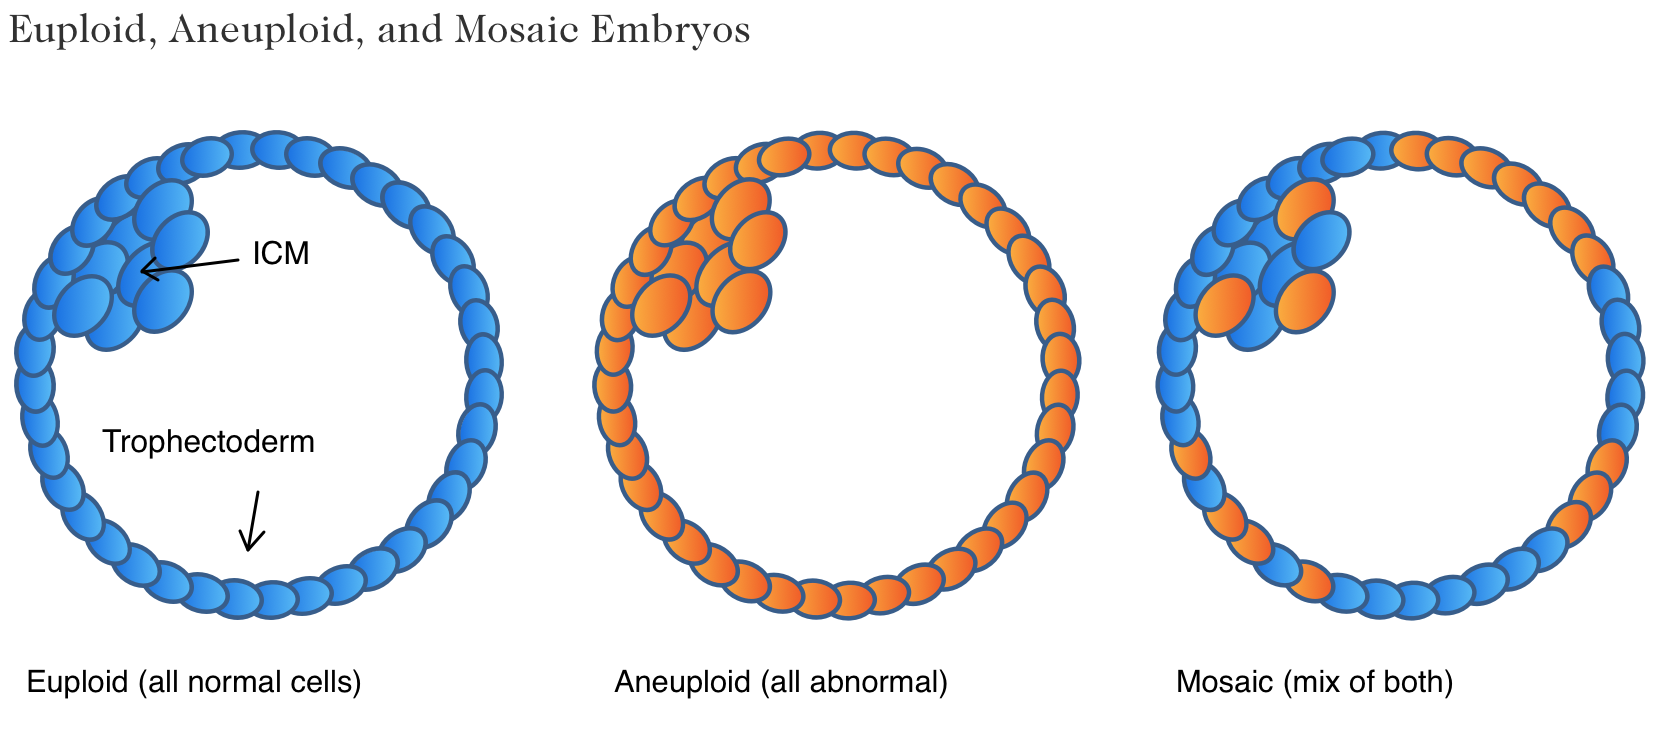 Euploid, Aneuploid, and Mosaic Embryos